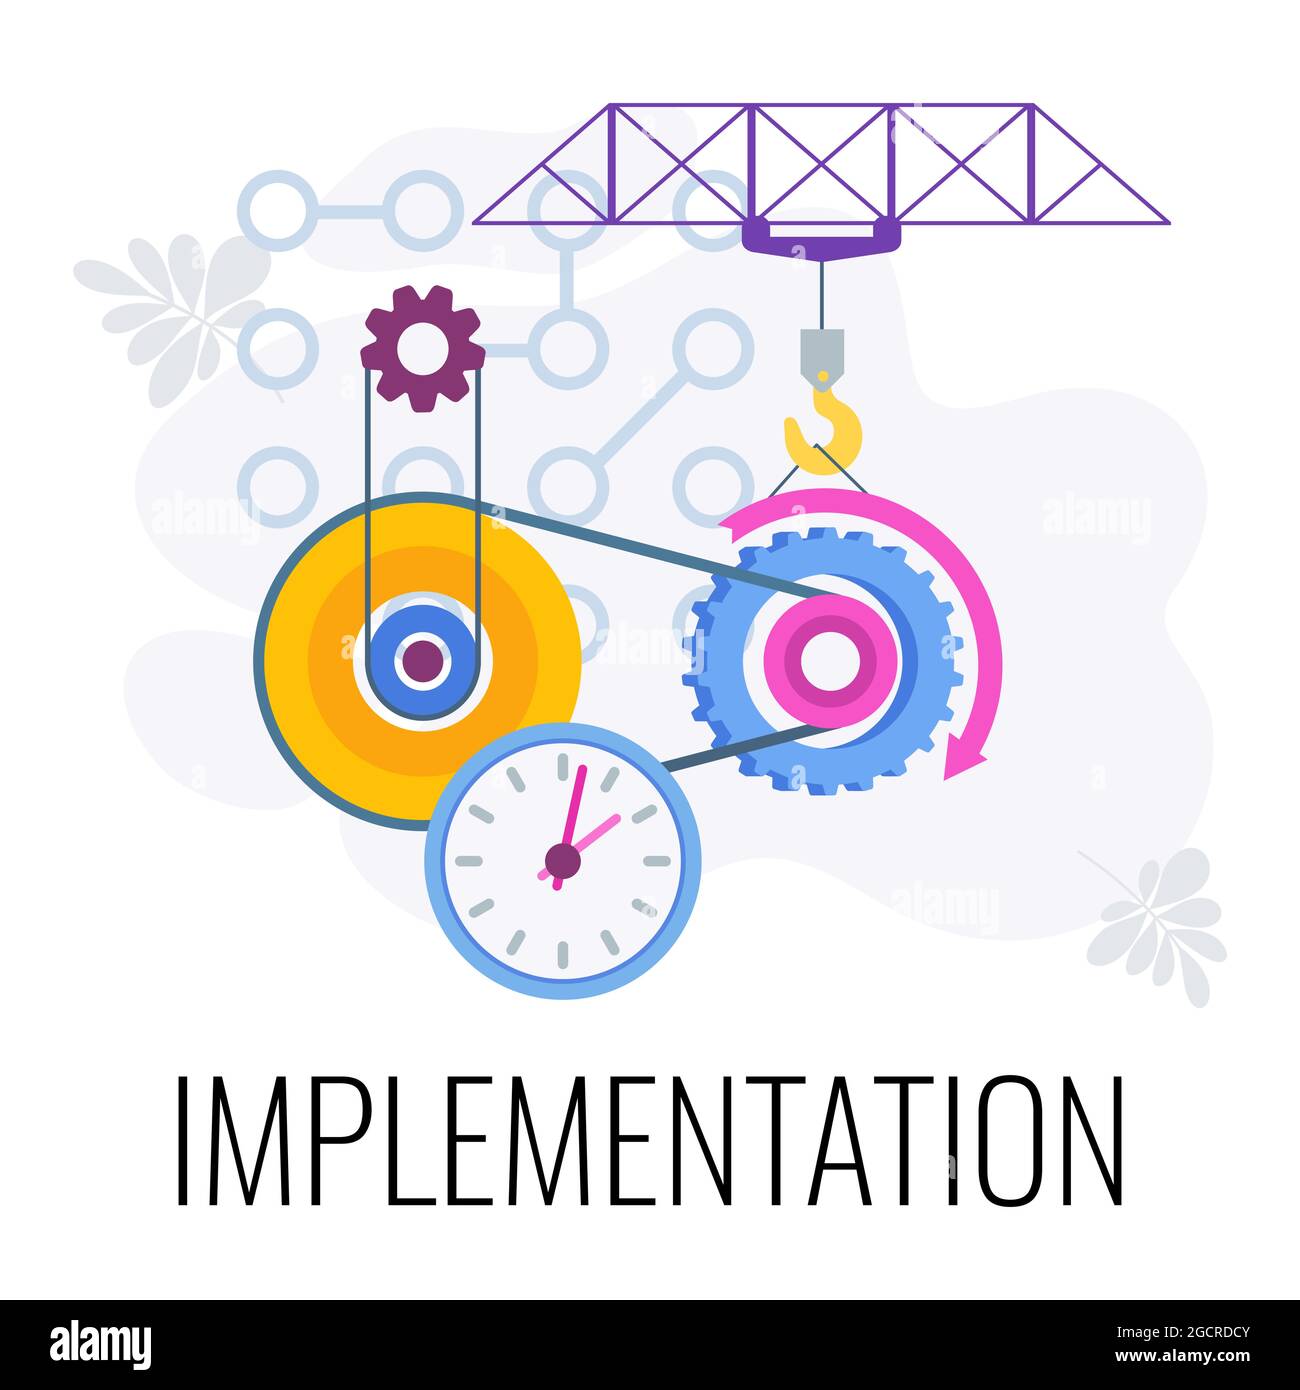 implementation icon